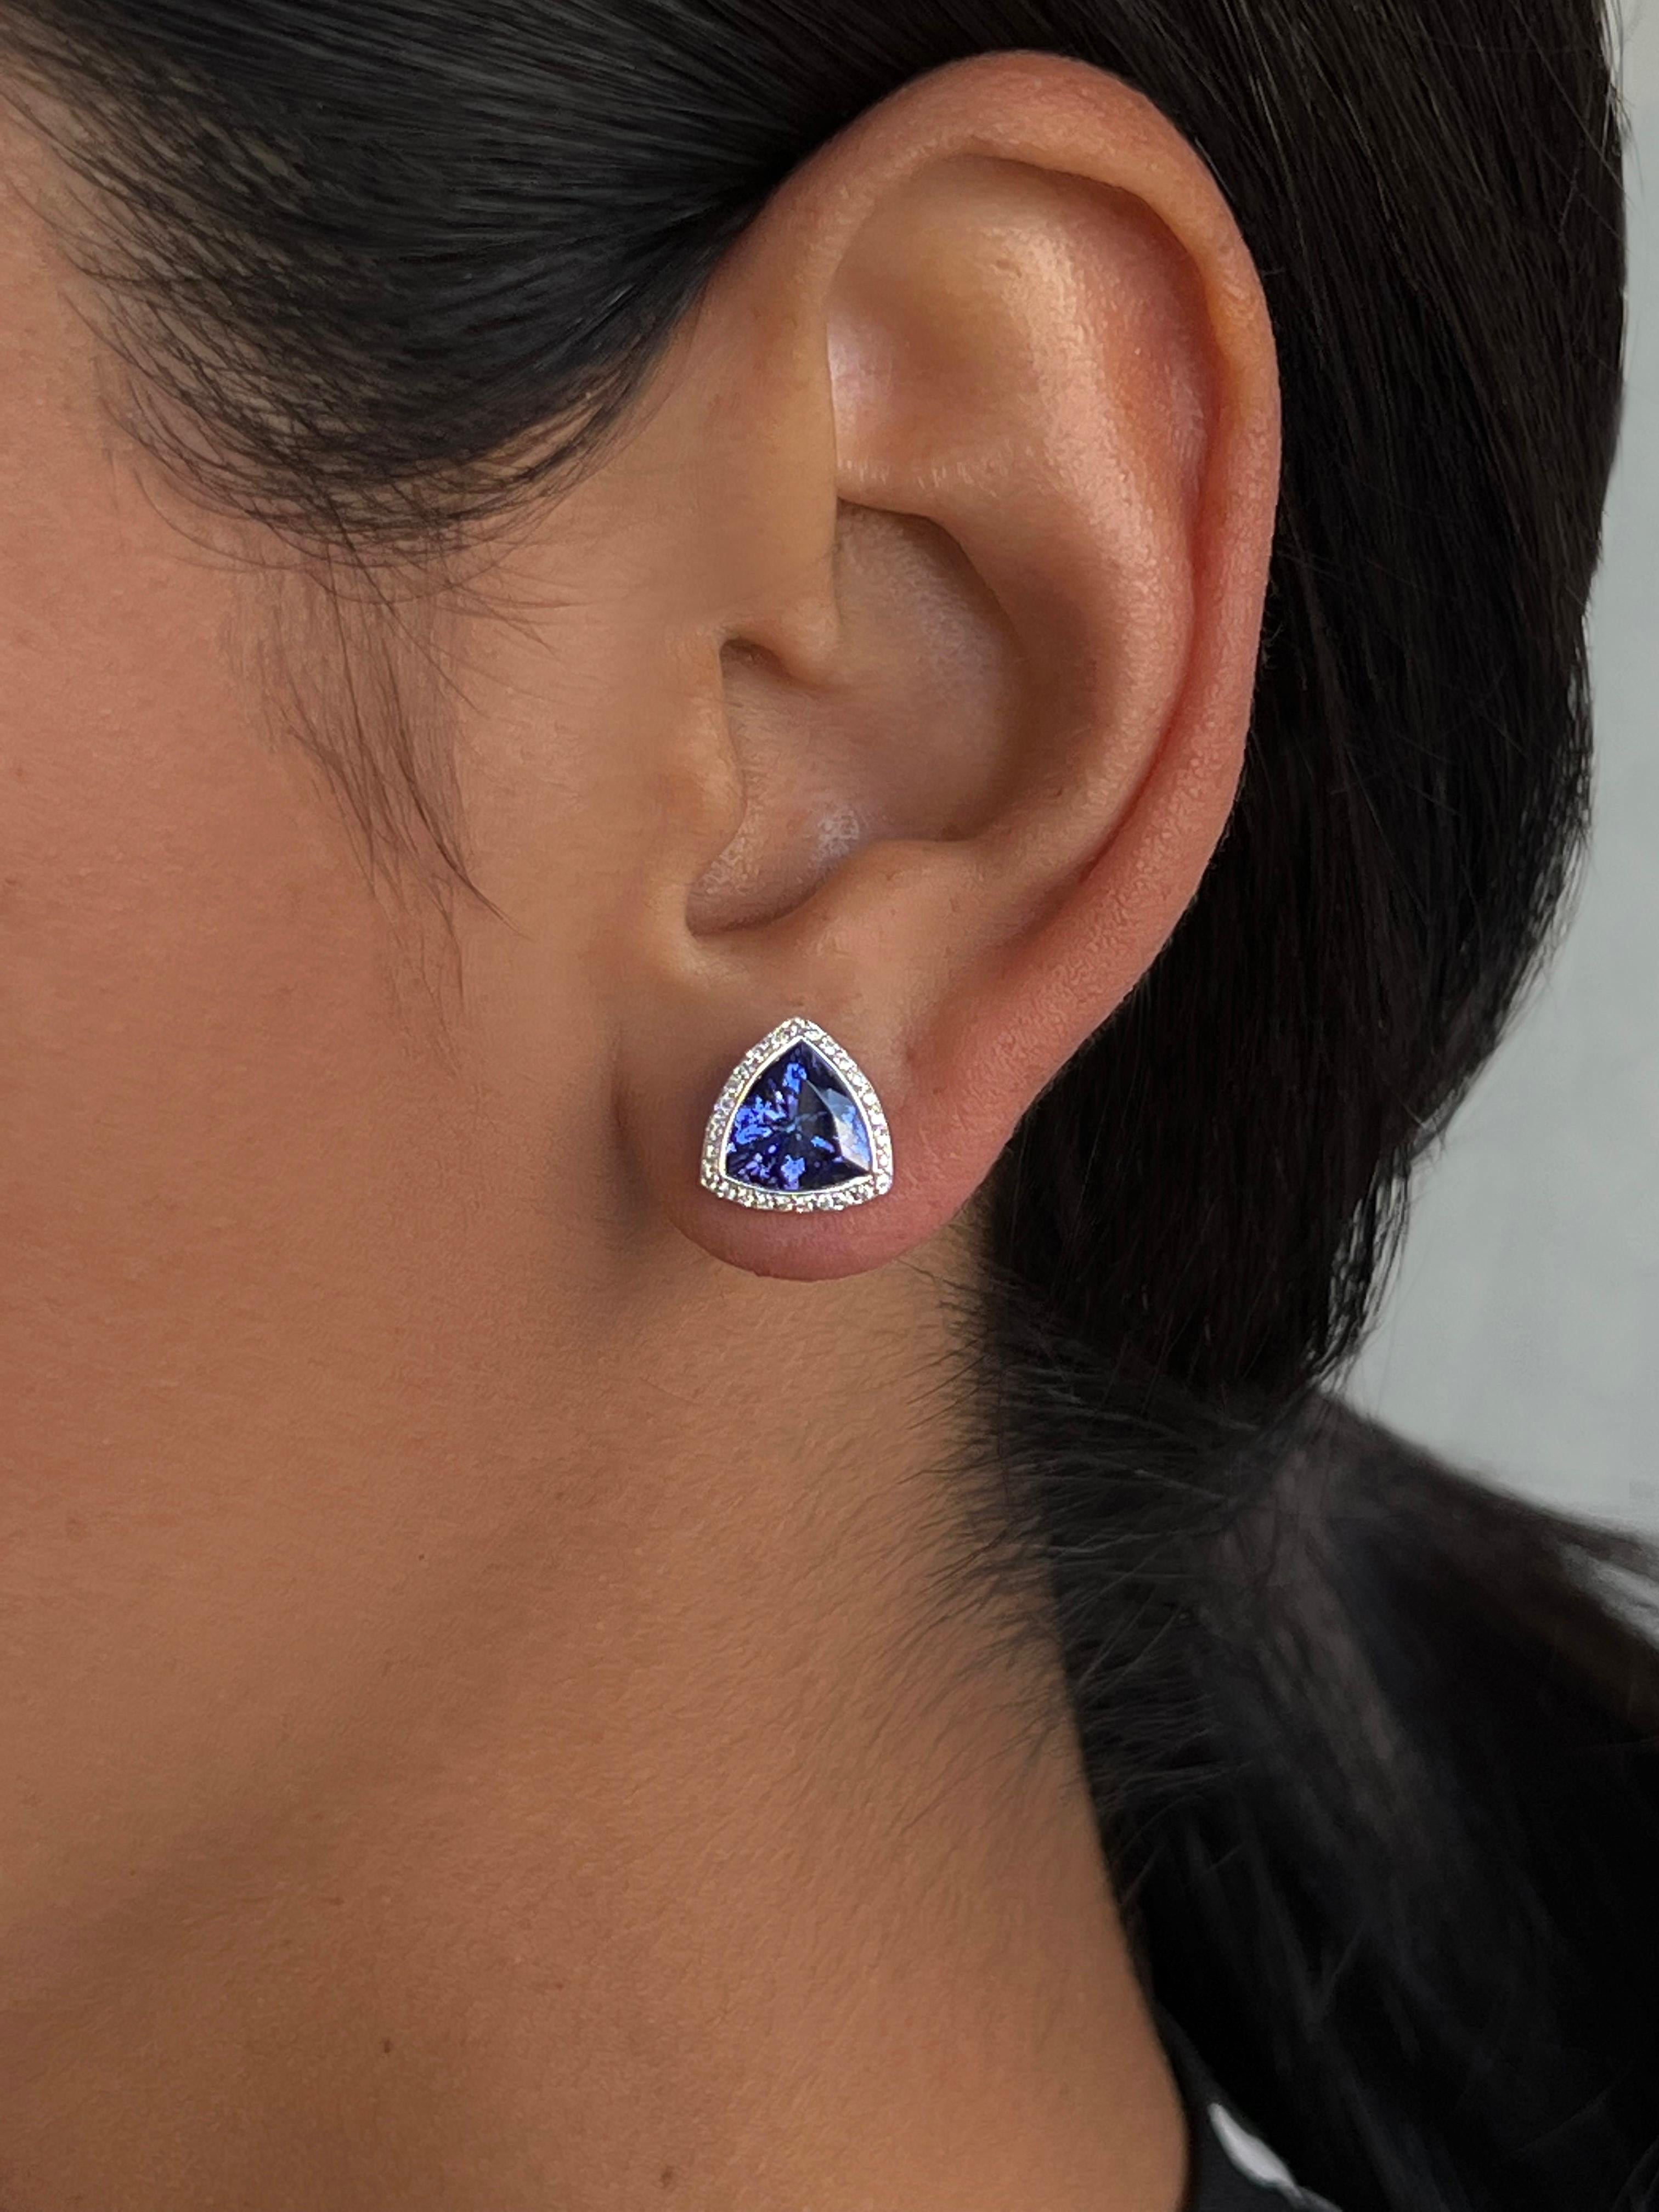 Oval Cut 3.61 Carat Trillion Cut Tanzanite Diamond Halo Studs Earrings in 18k White Gold For Sale